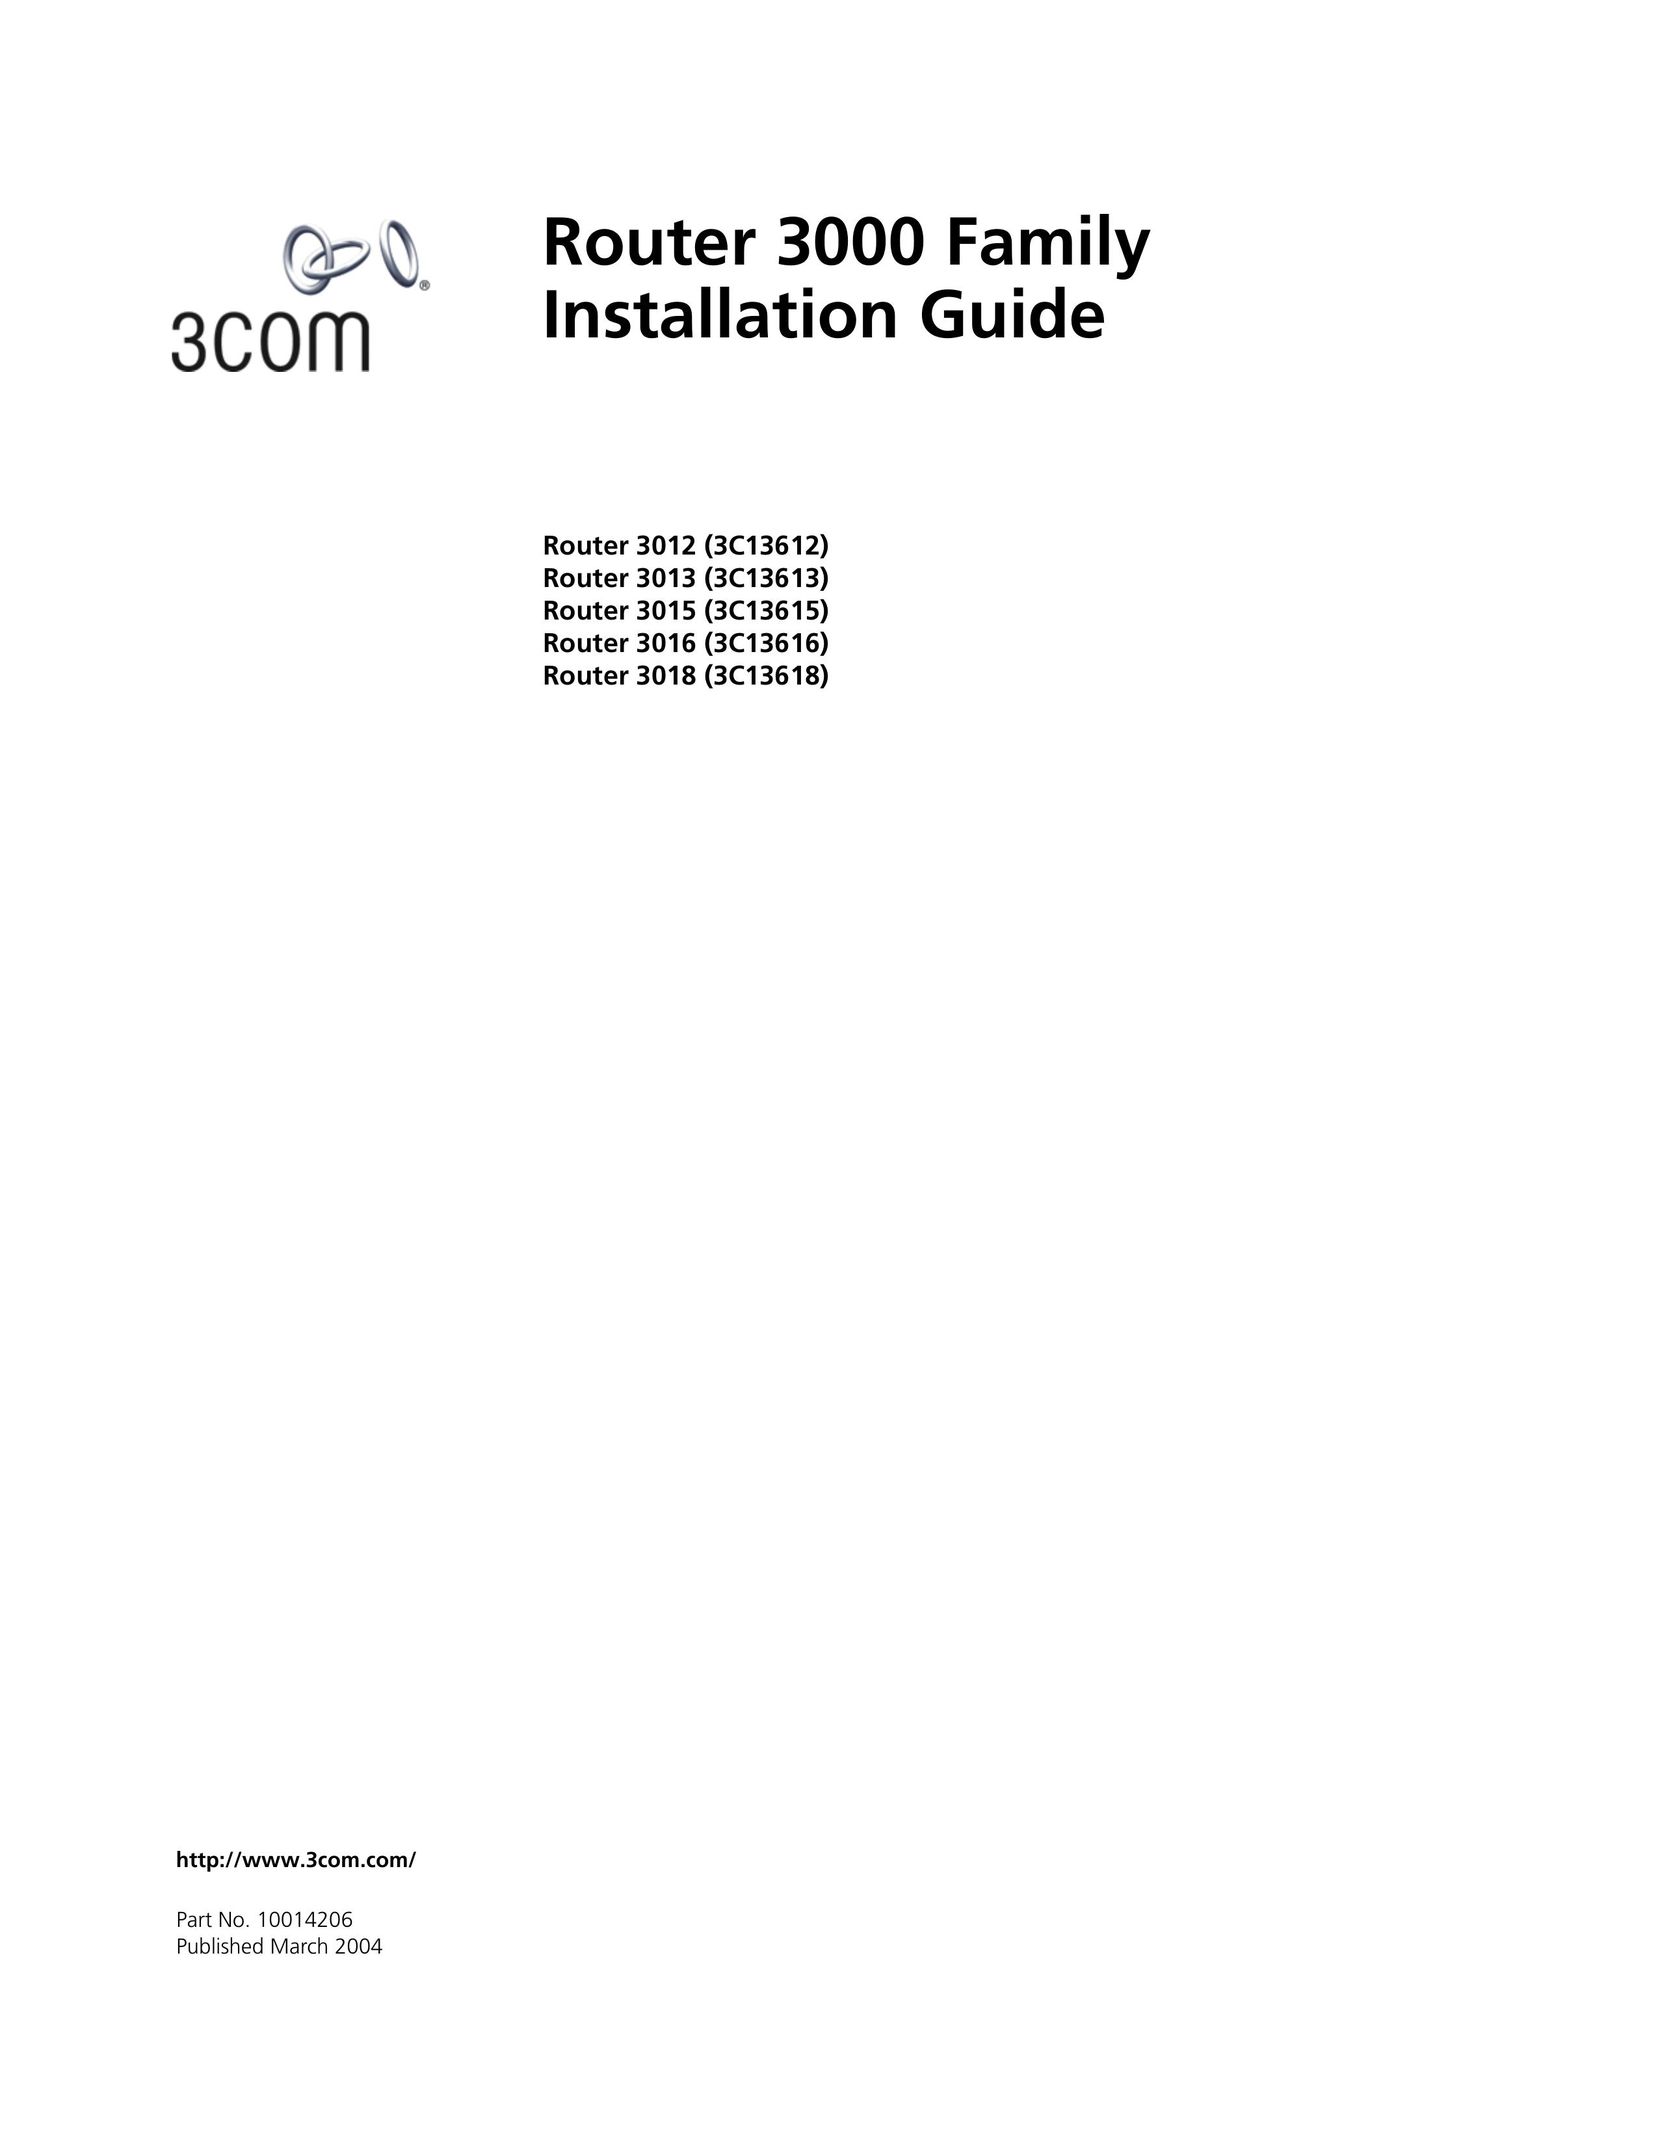 3Com 3016 (3C13616) Saw User Manual